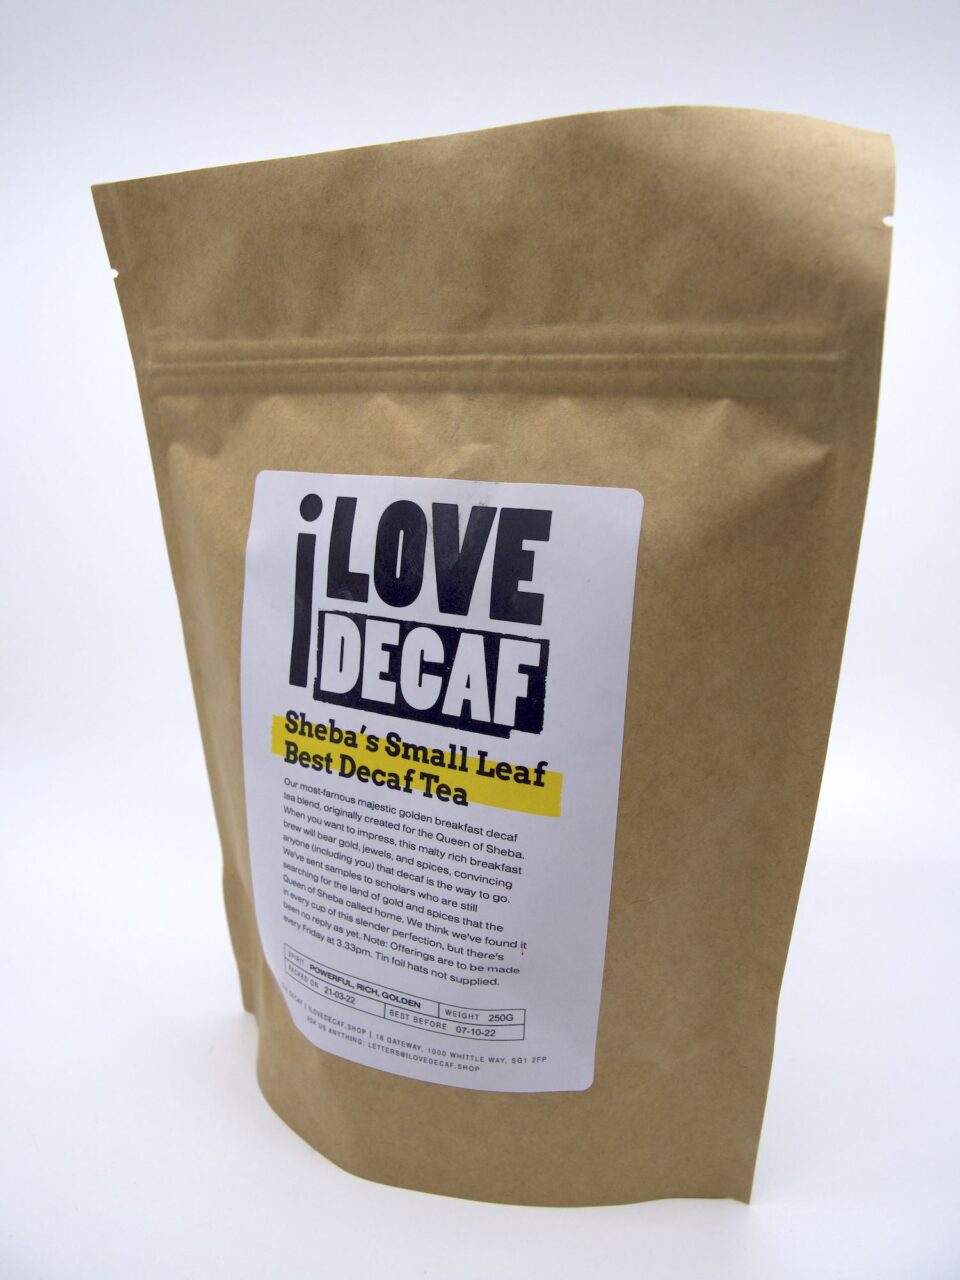 Shebas small leaf best decaf tea bag 2